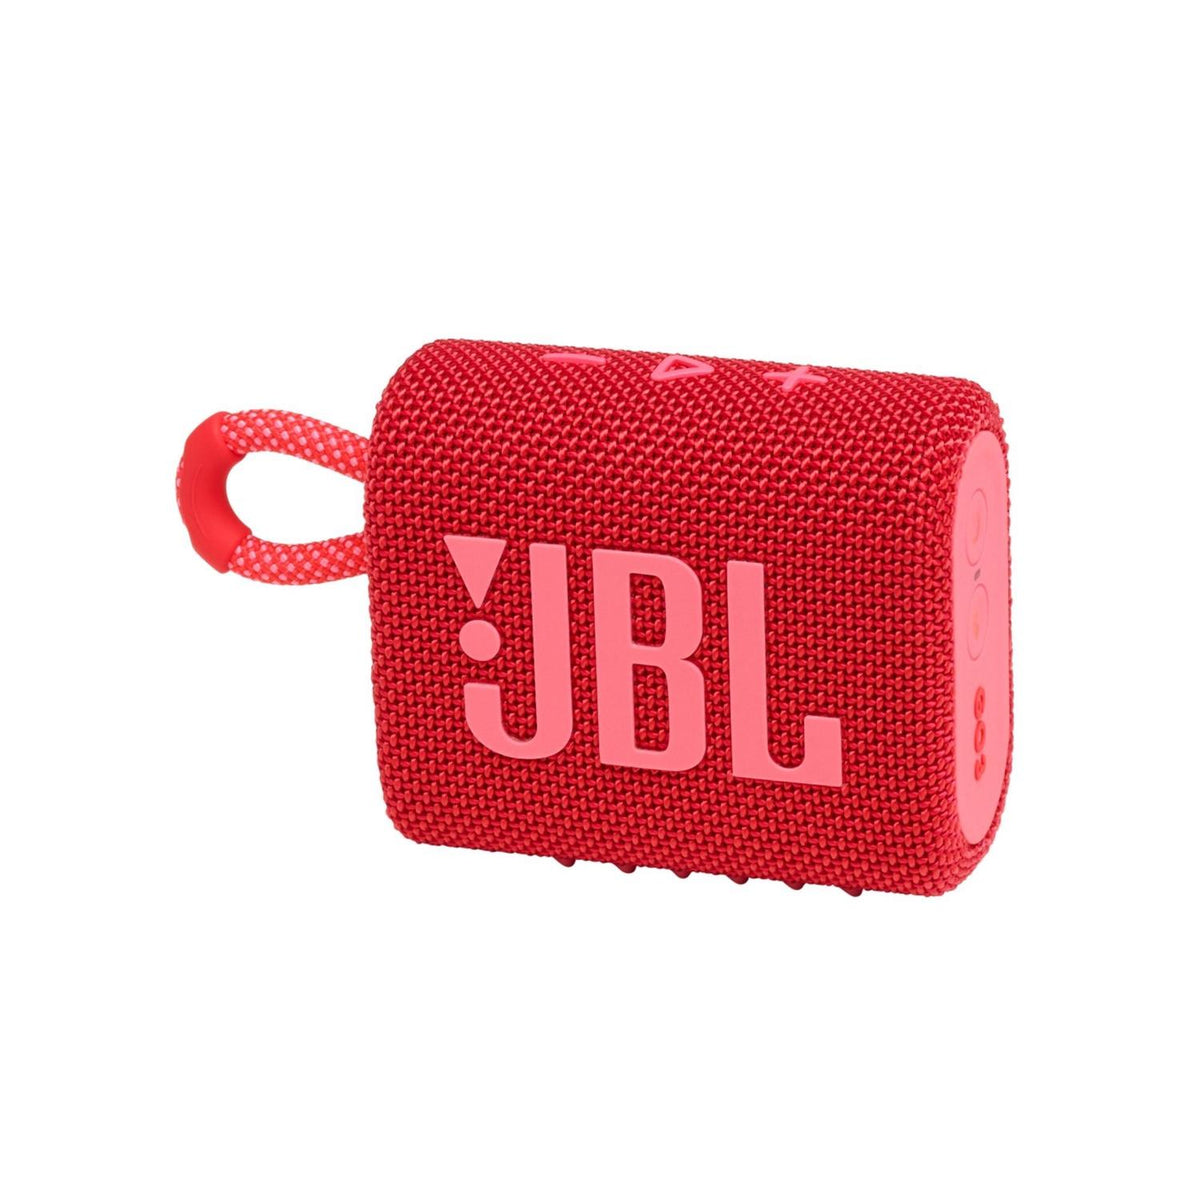 JBL Bocina Portátil Bocina Portátil GO 3 Bluetooth - vertikal